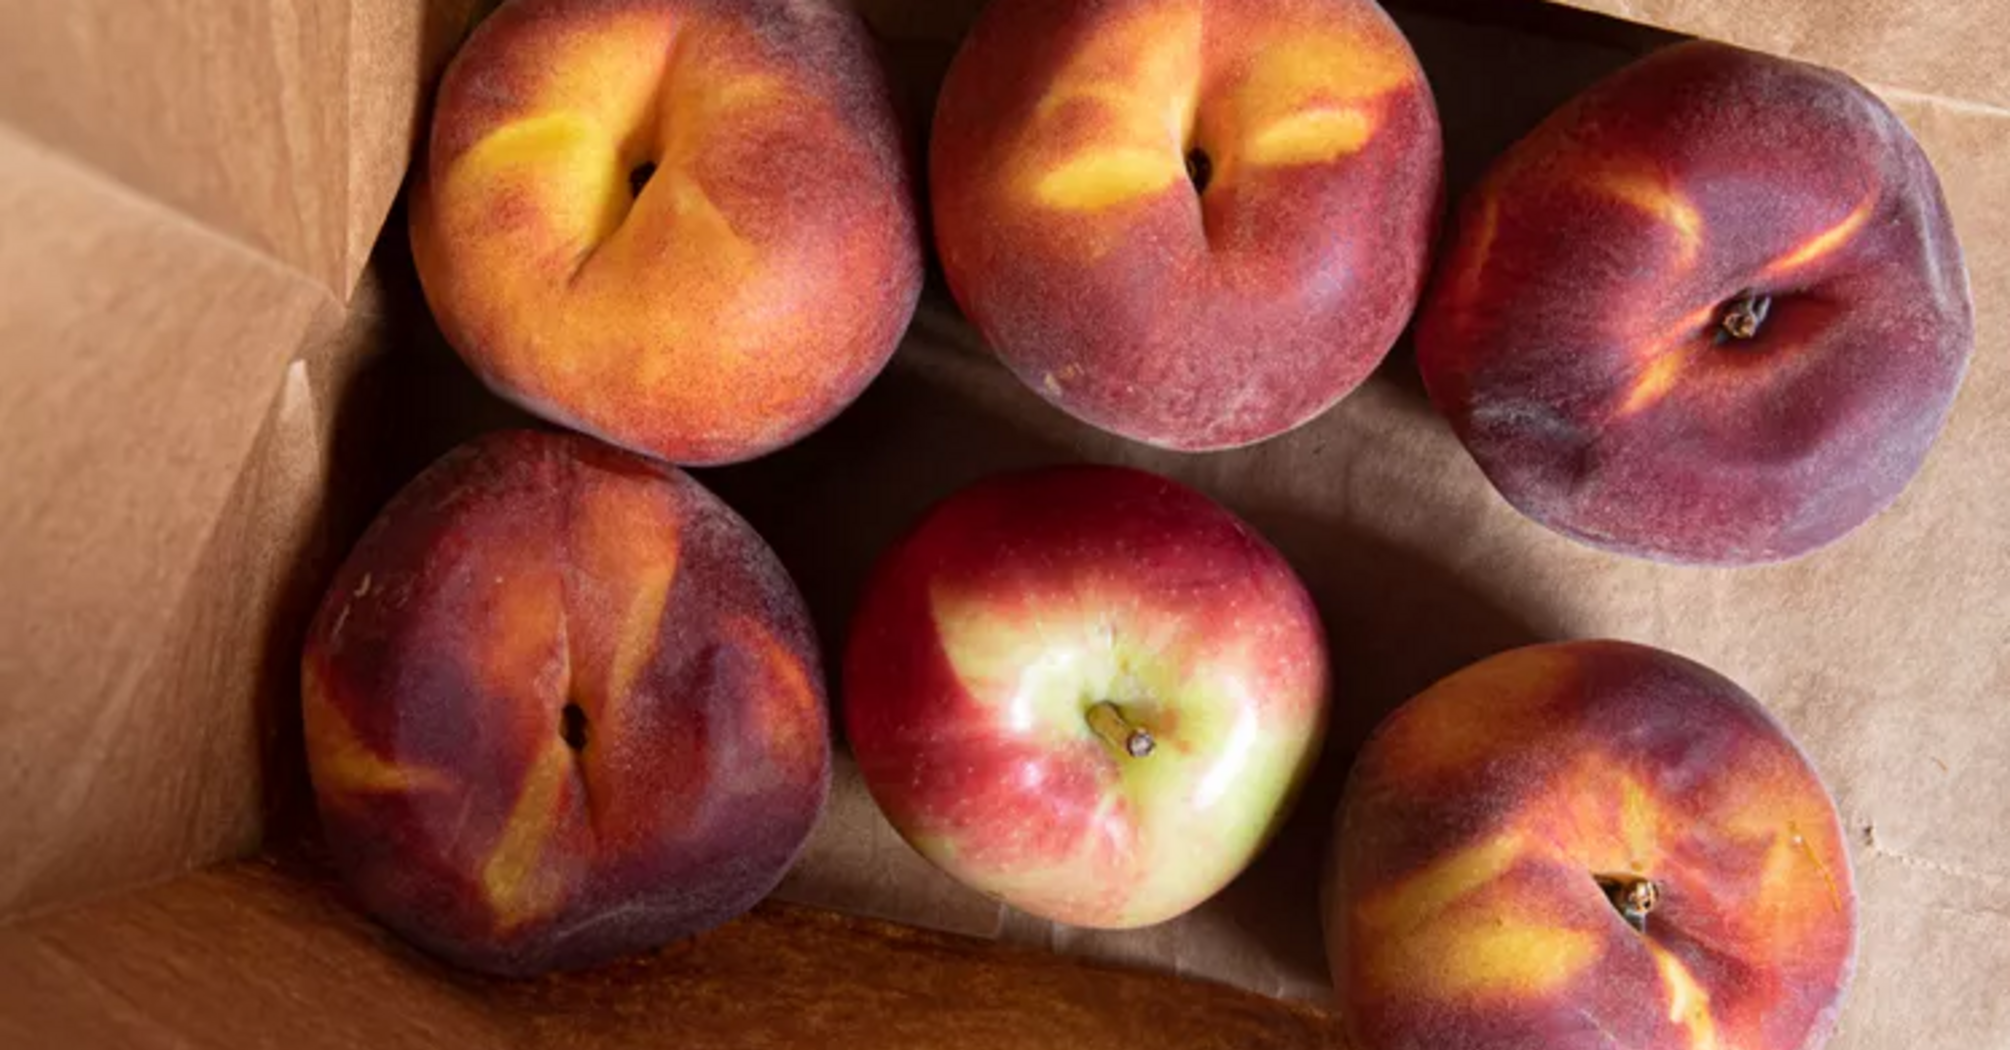 Methods for ripening peaches